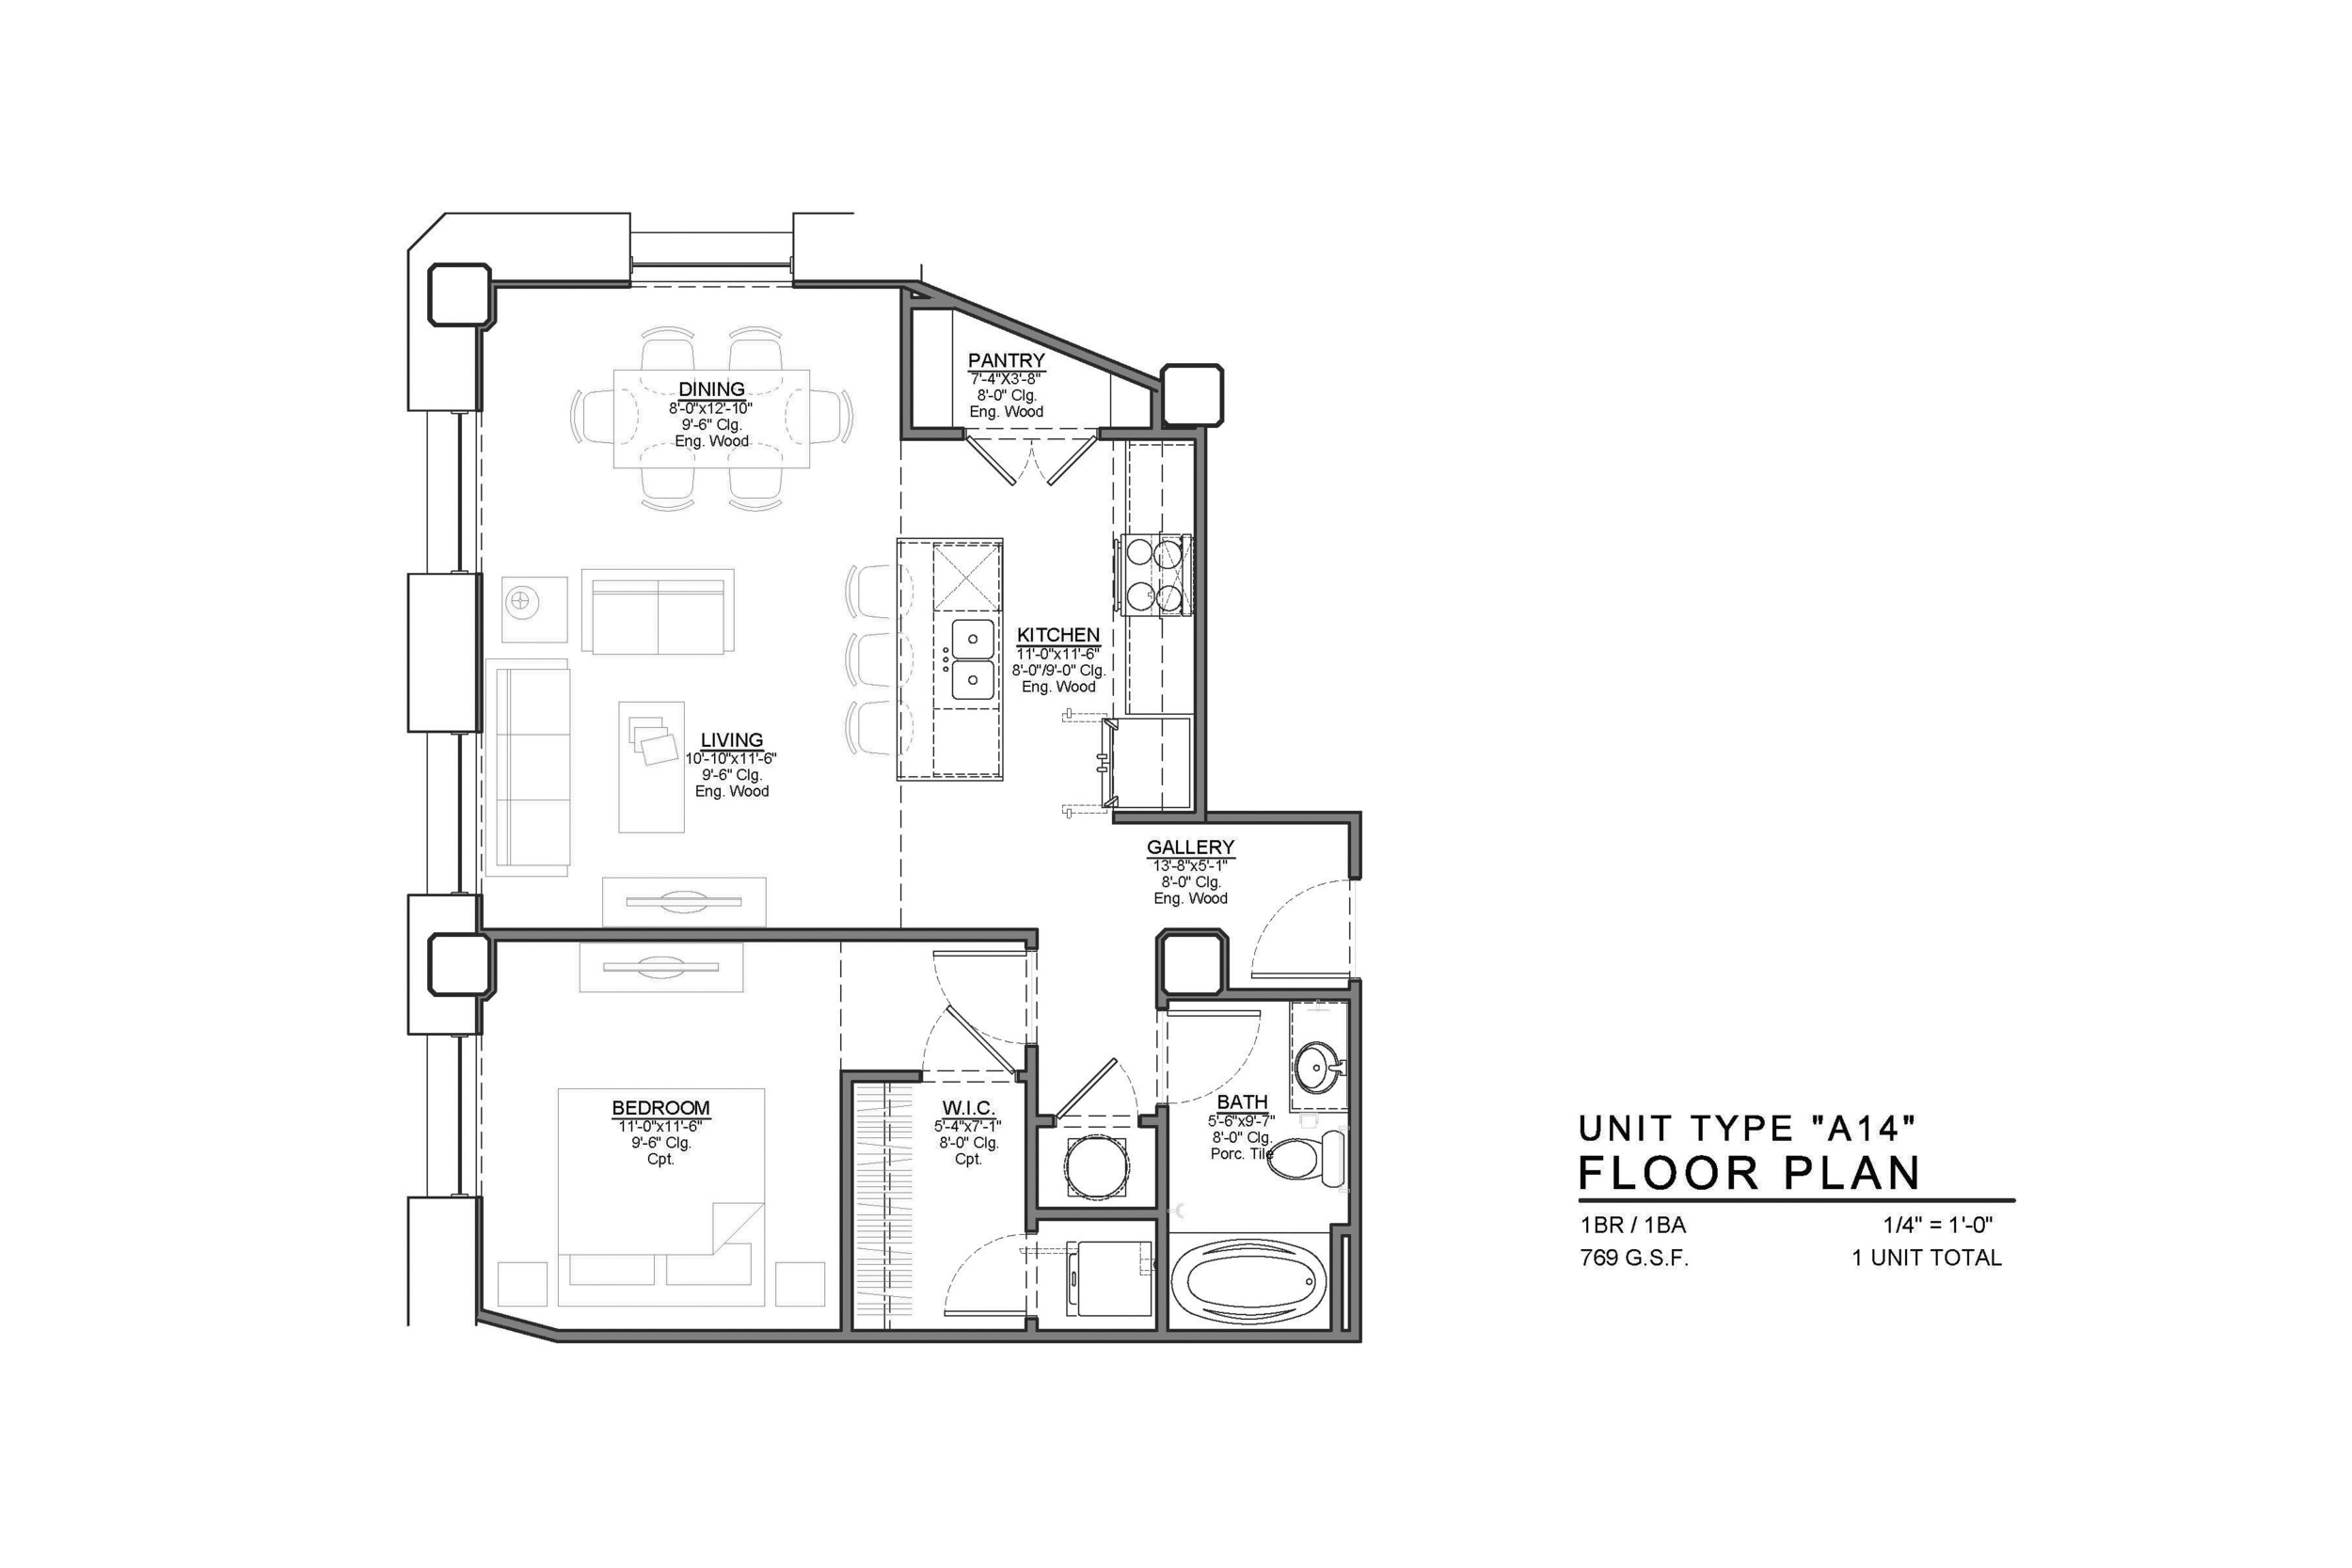 A14 FLOOR PLAN: 1 BEDROOM / 1 BATH